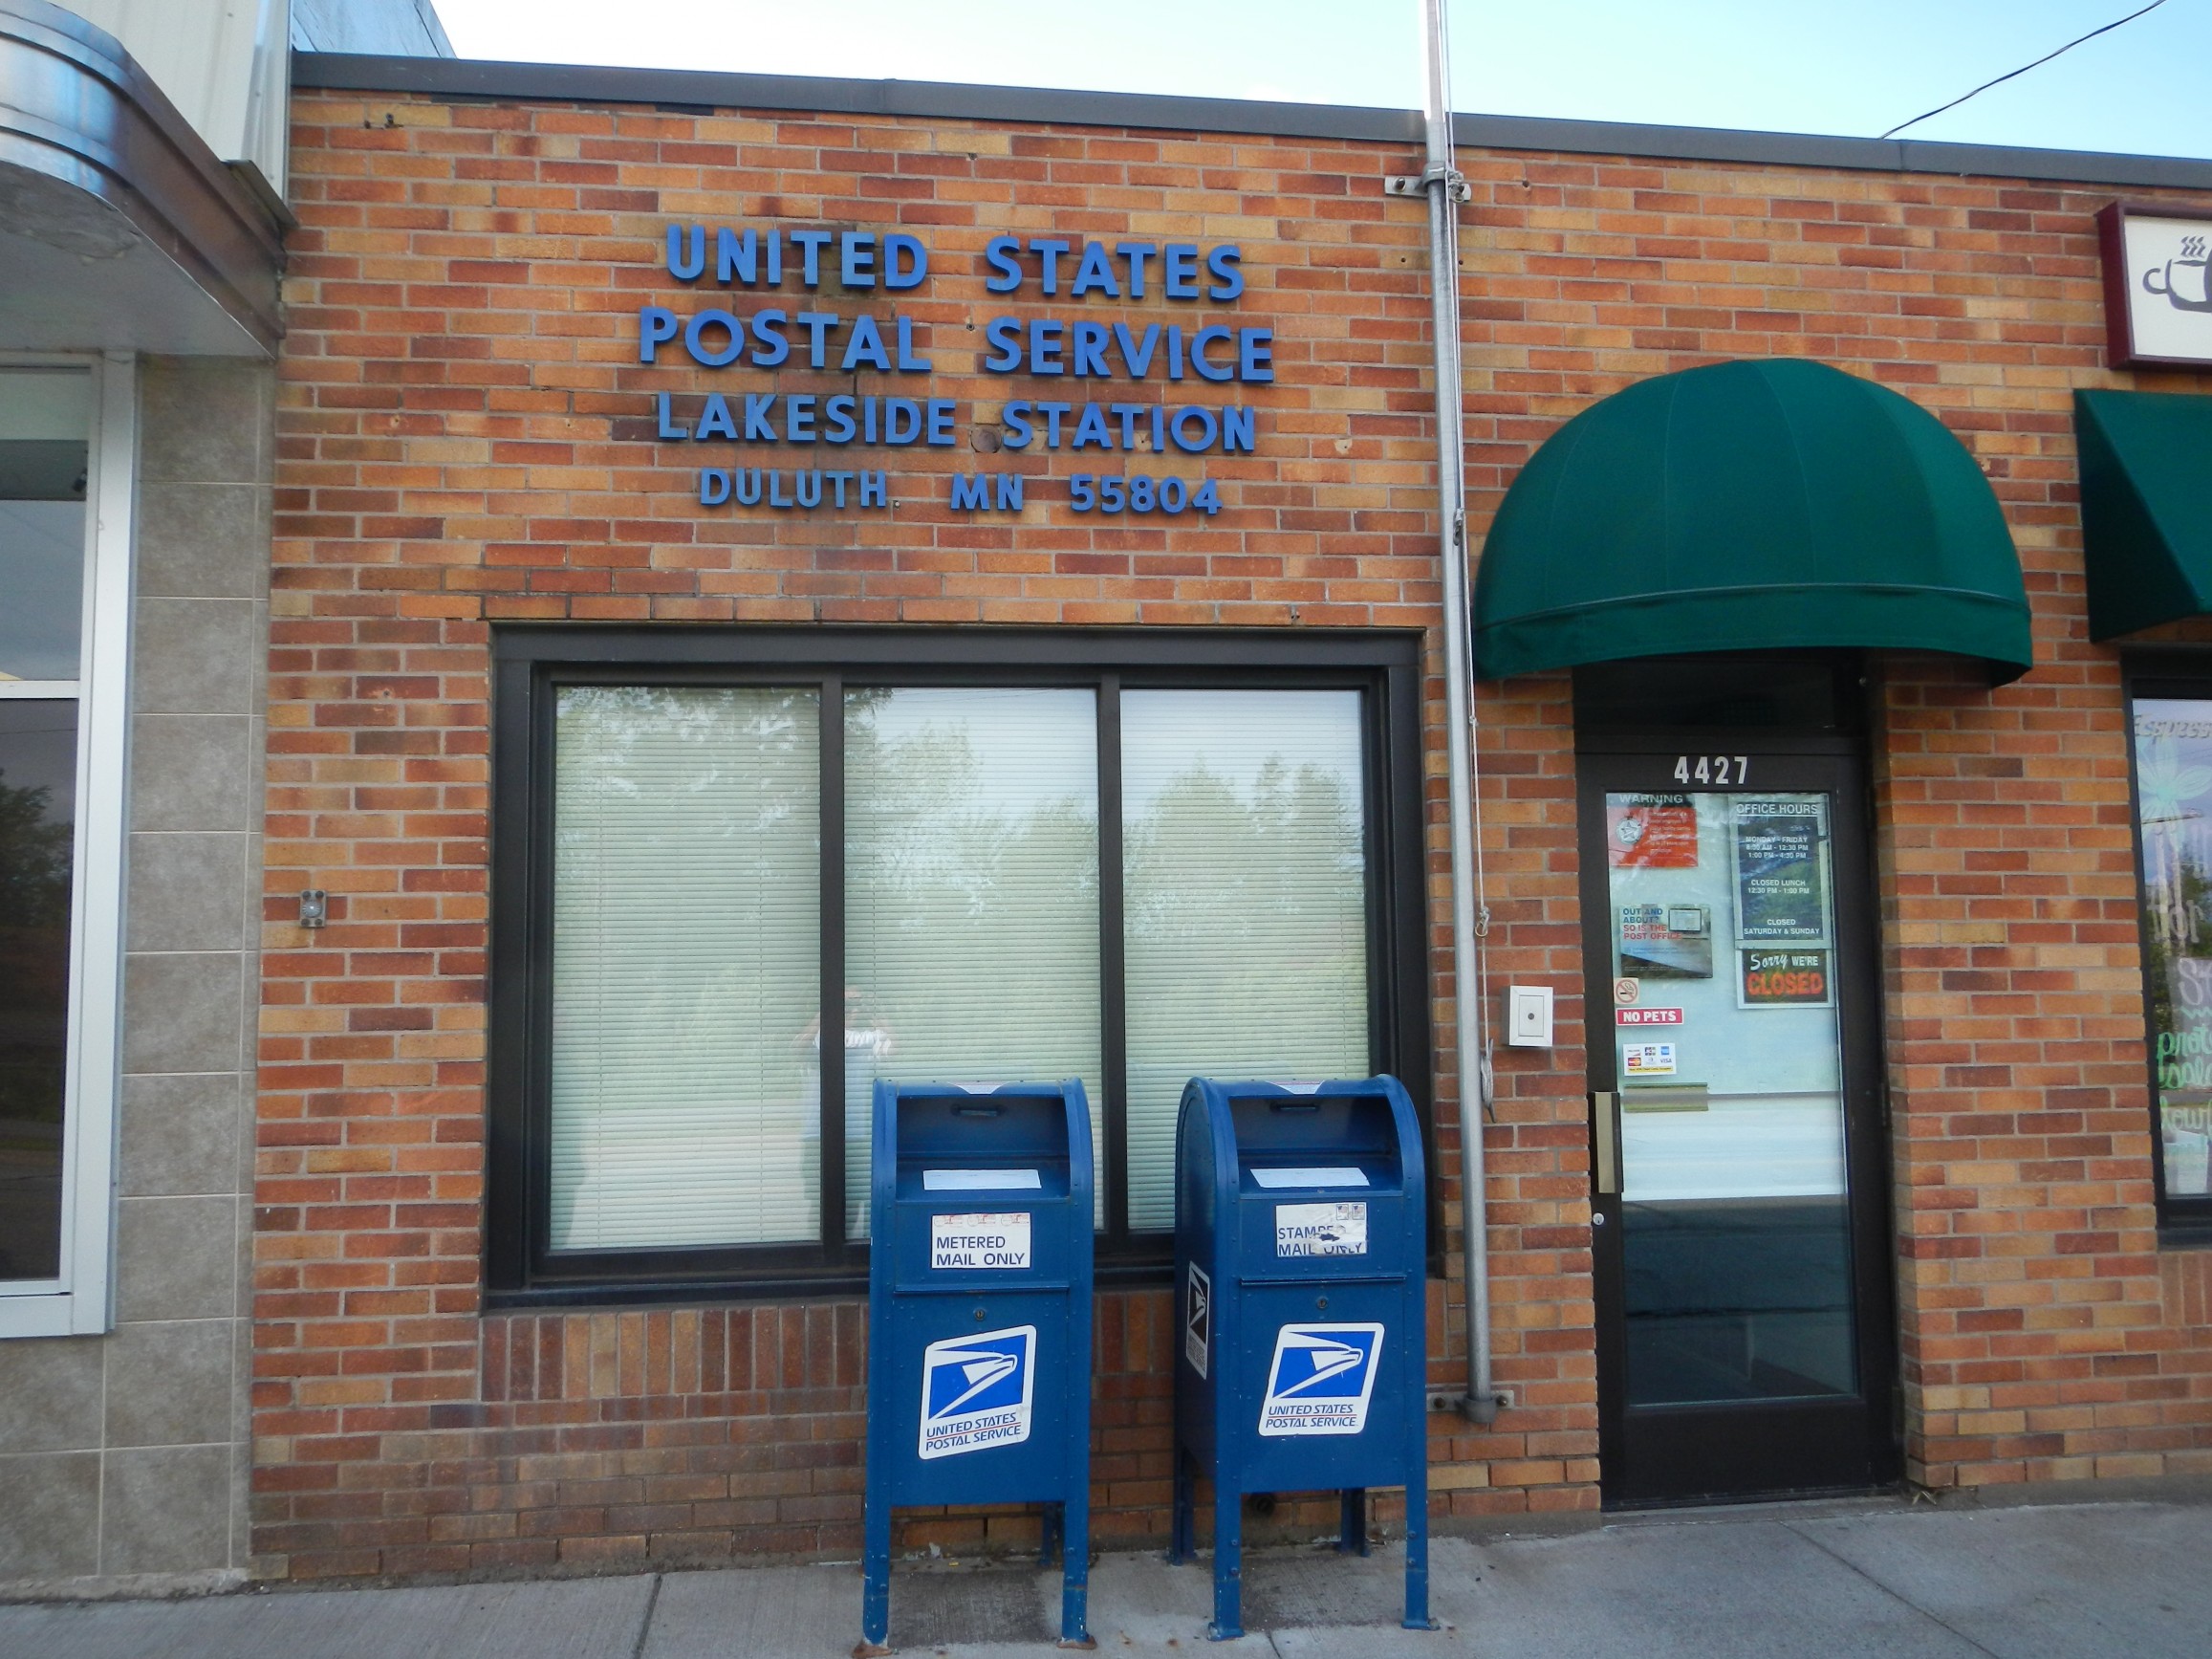 Station post. Почтовый офис. Вывеска Post Office. Post Office фото. Post Office перевод.